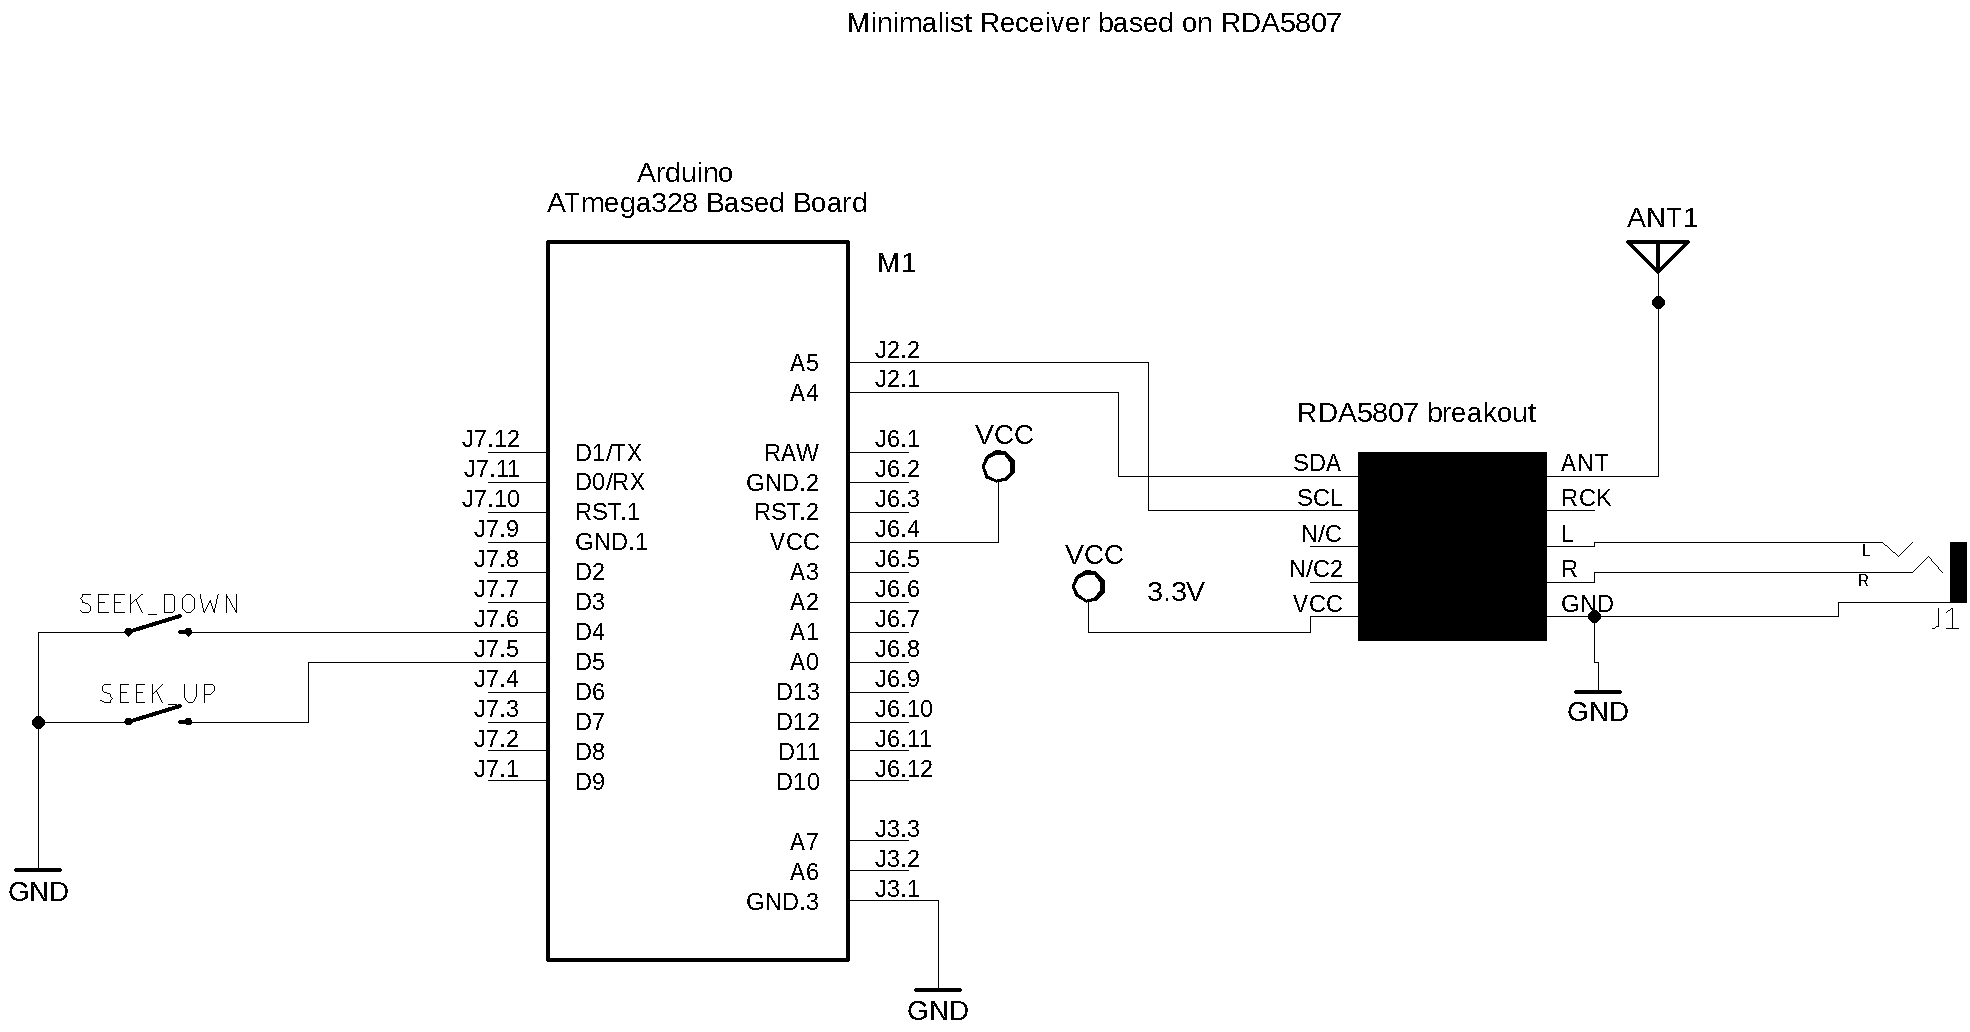 Minimalist receiver based on RDA5807